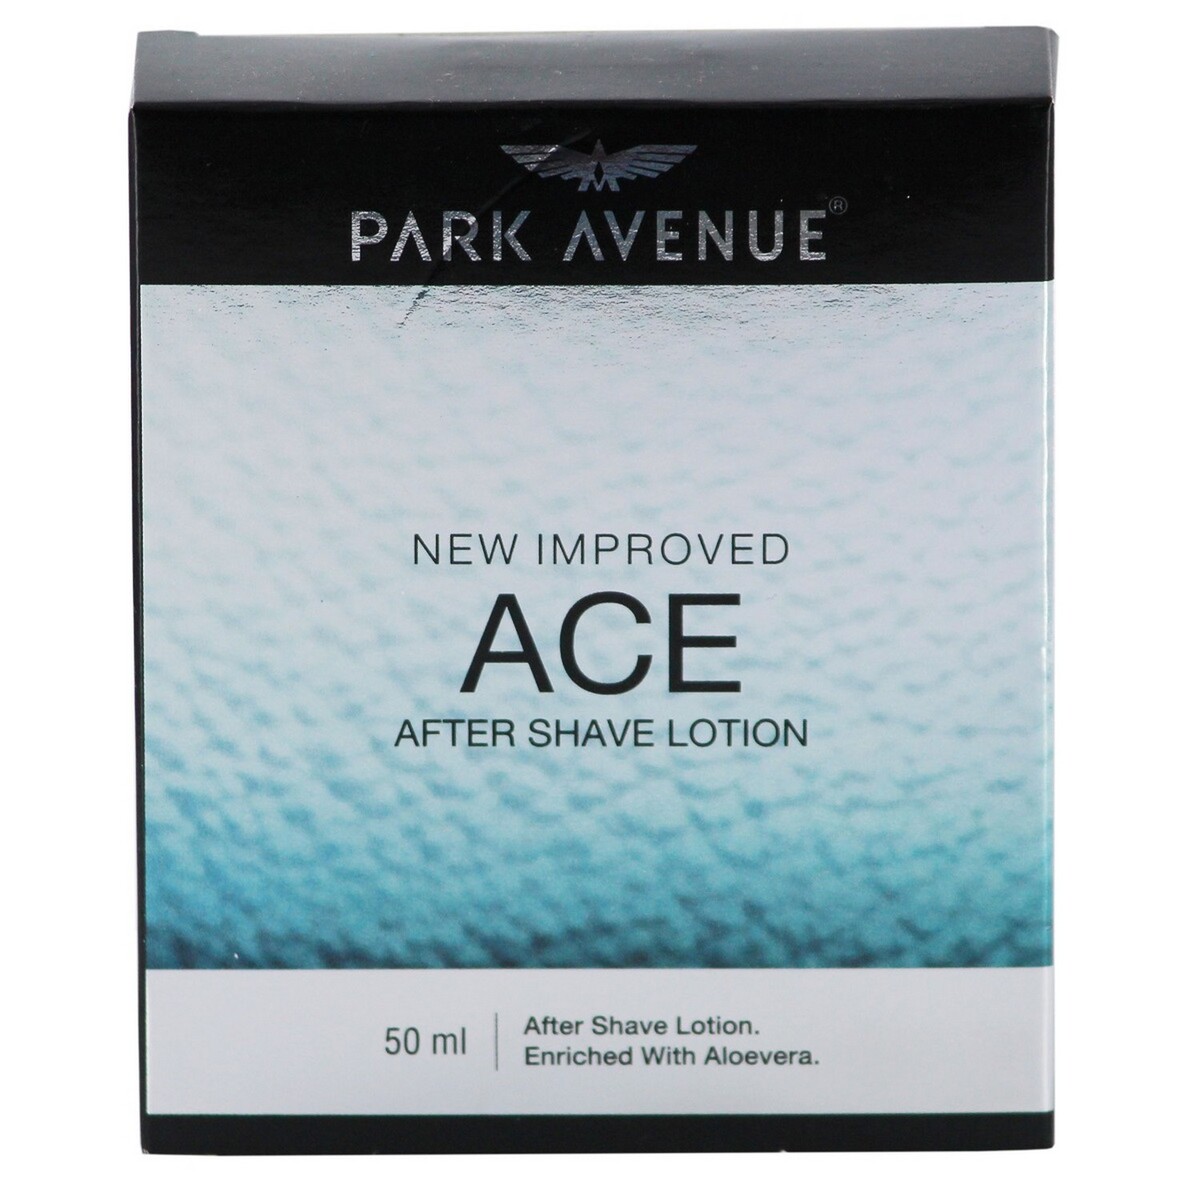 Park Avenue  After Shave Lotion Ace 50ml